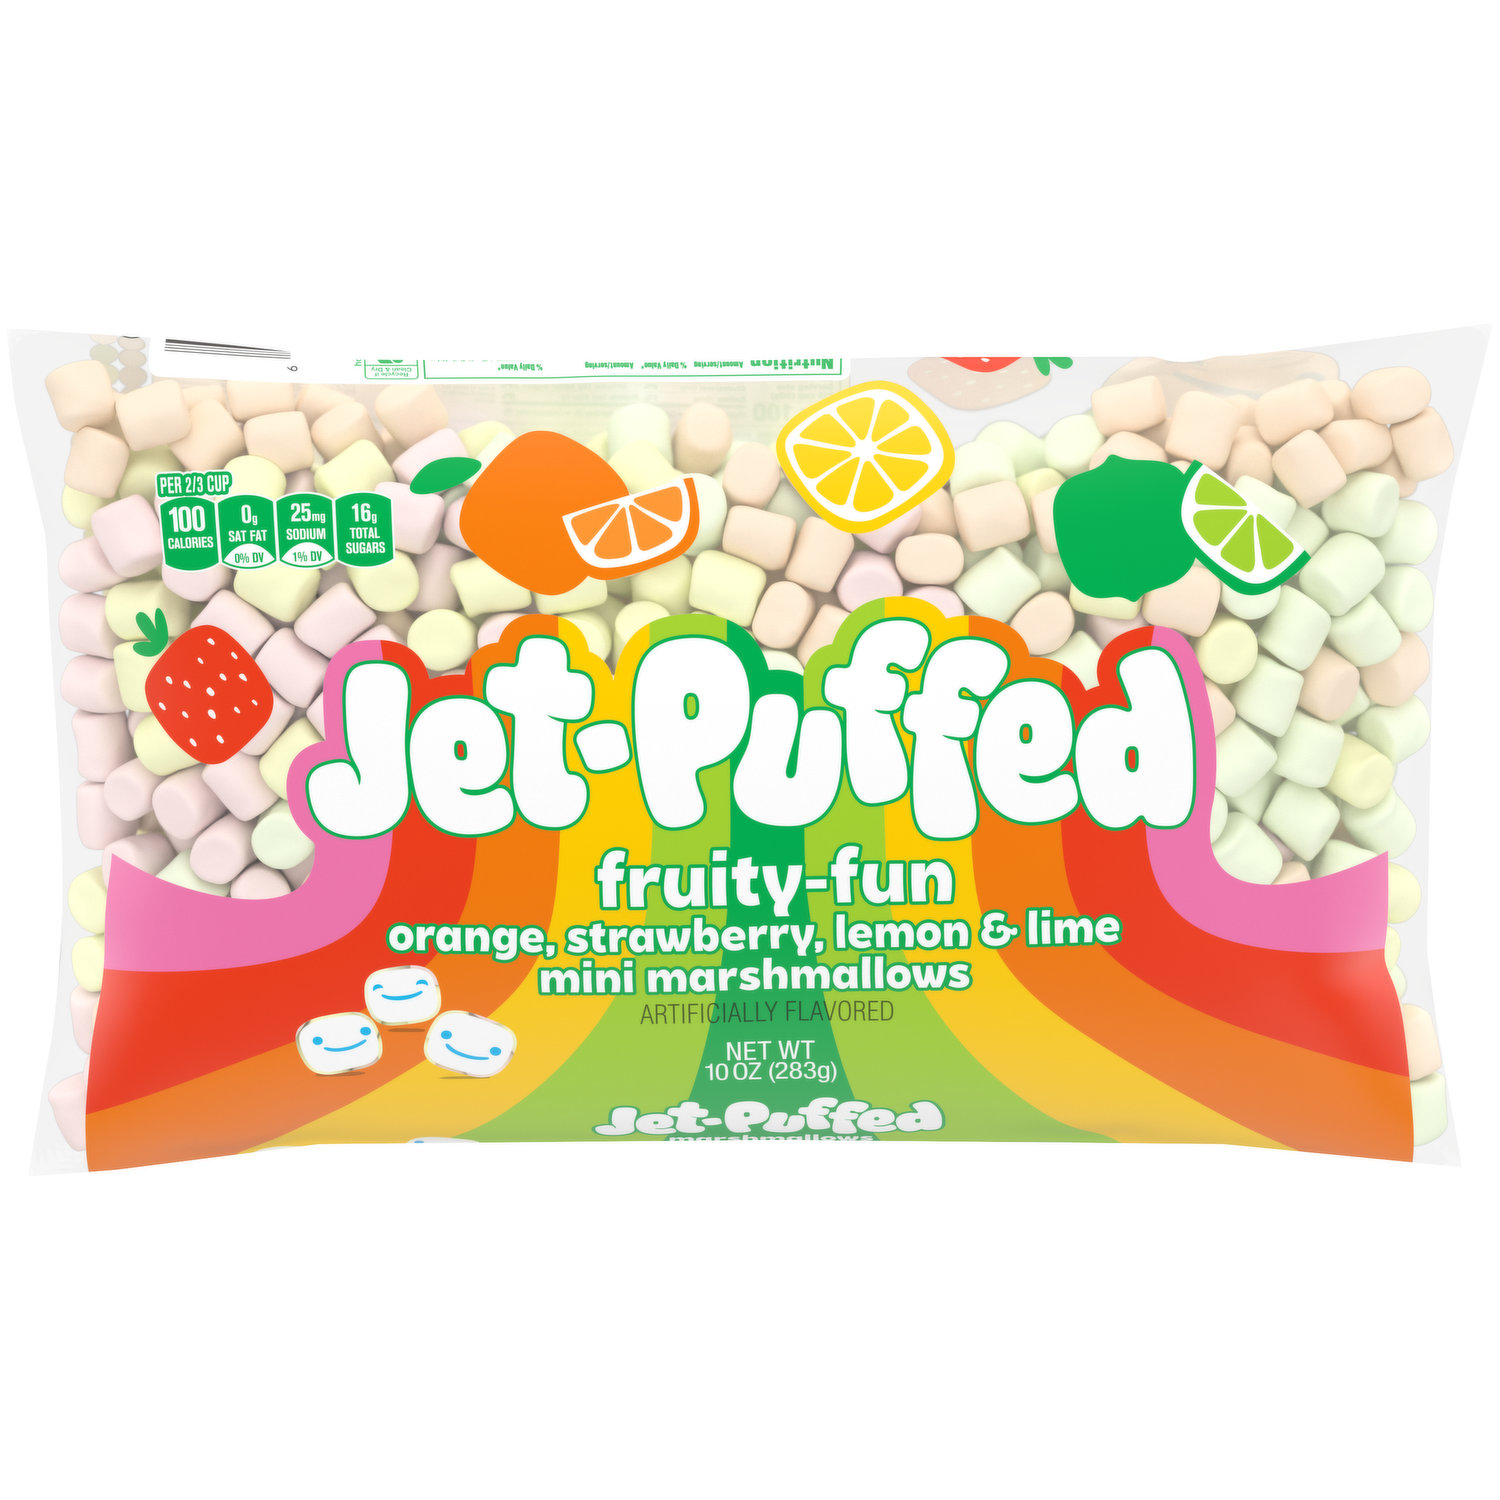 Jet-Puffed Miniature Marshmallows, 10.5 oz